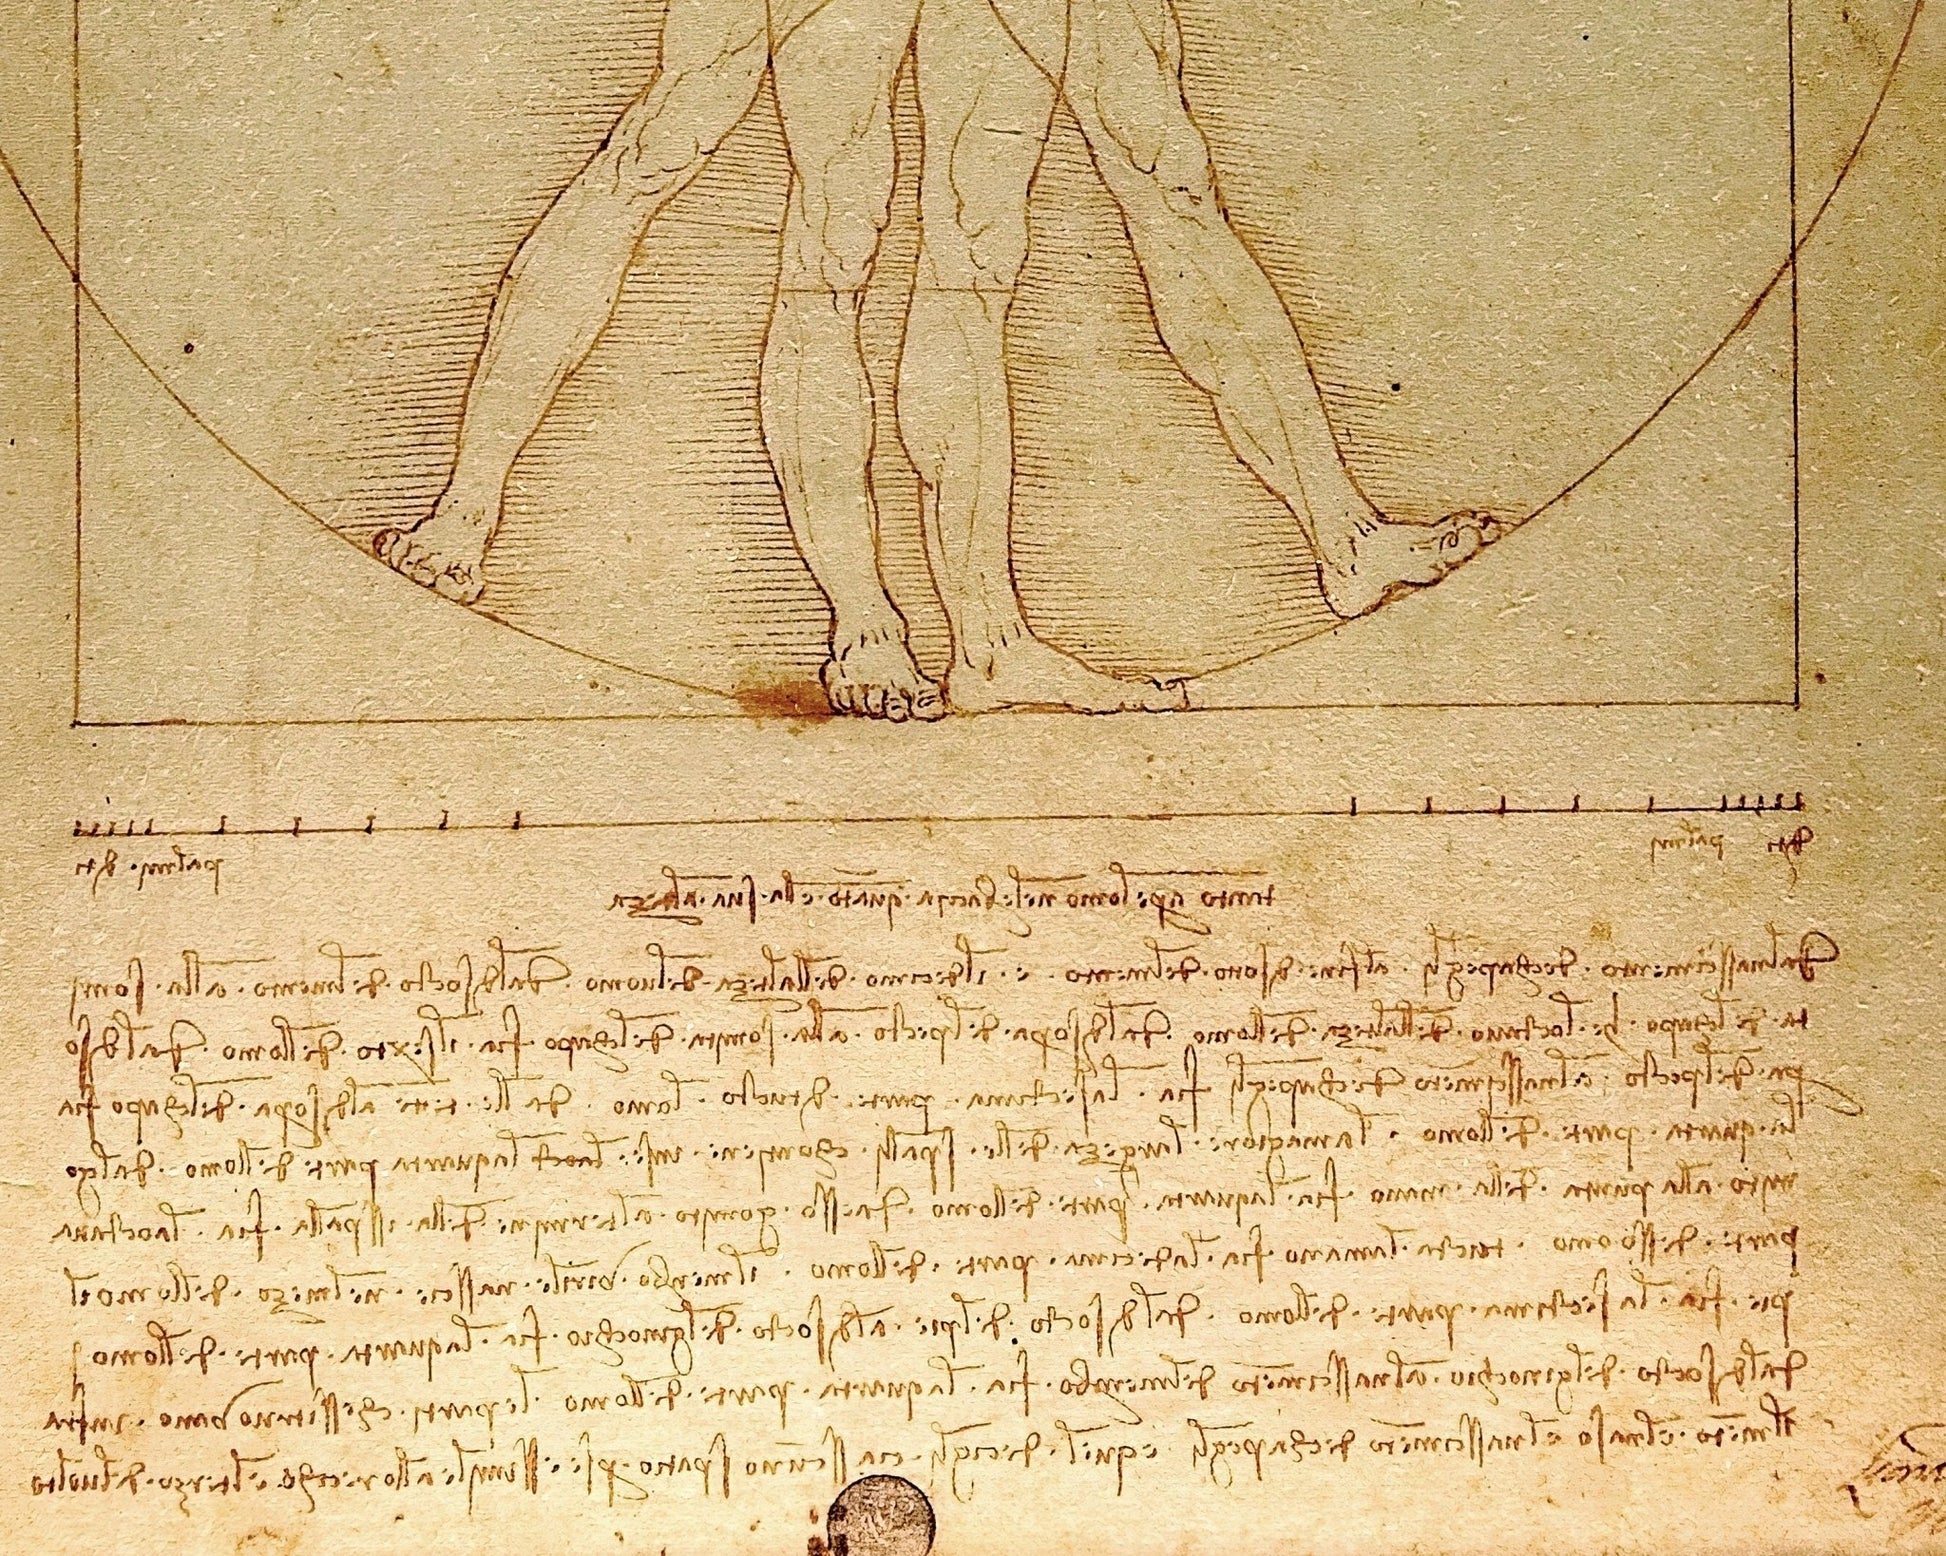 Leonardo da Vinci "Vitruvian Man" (c.1490) - Mabon Gallery